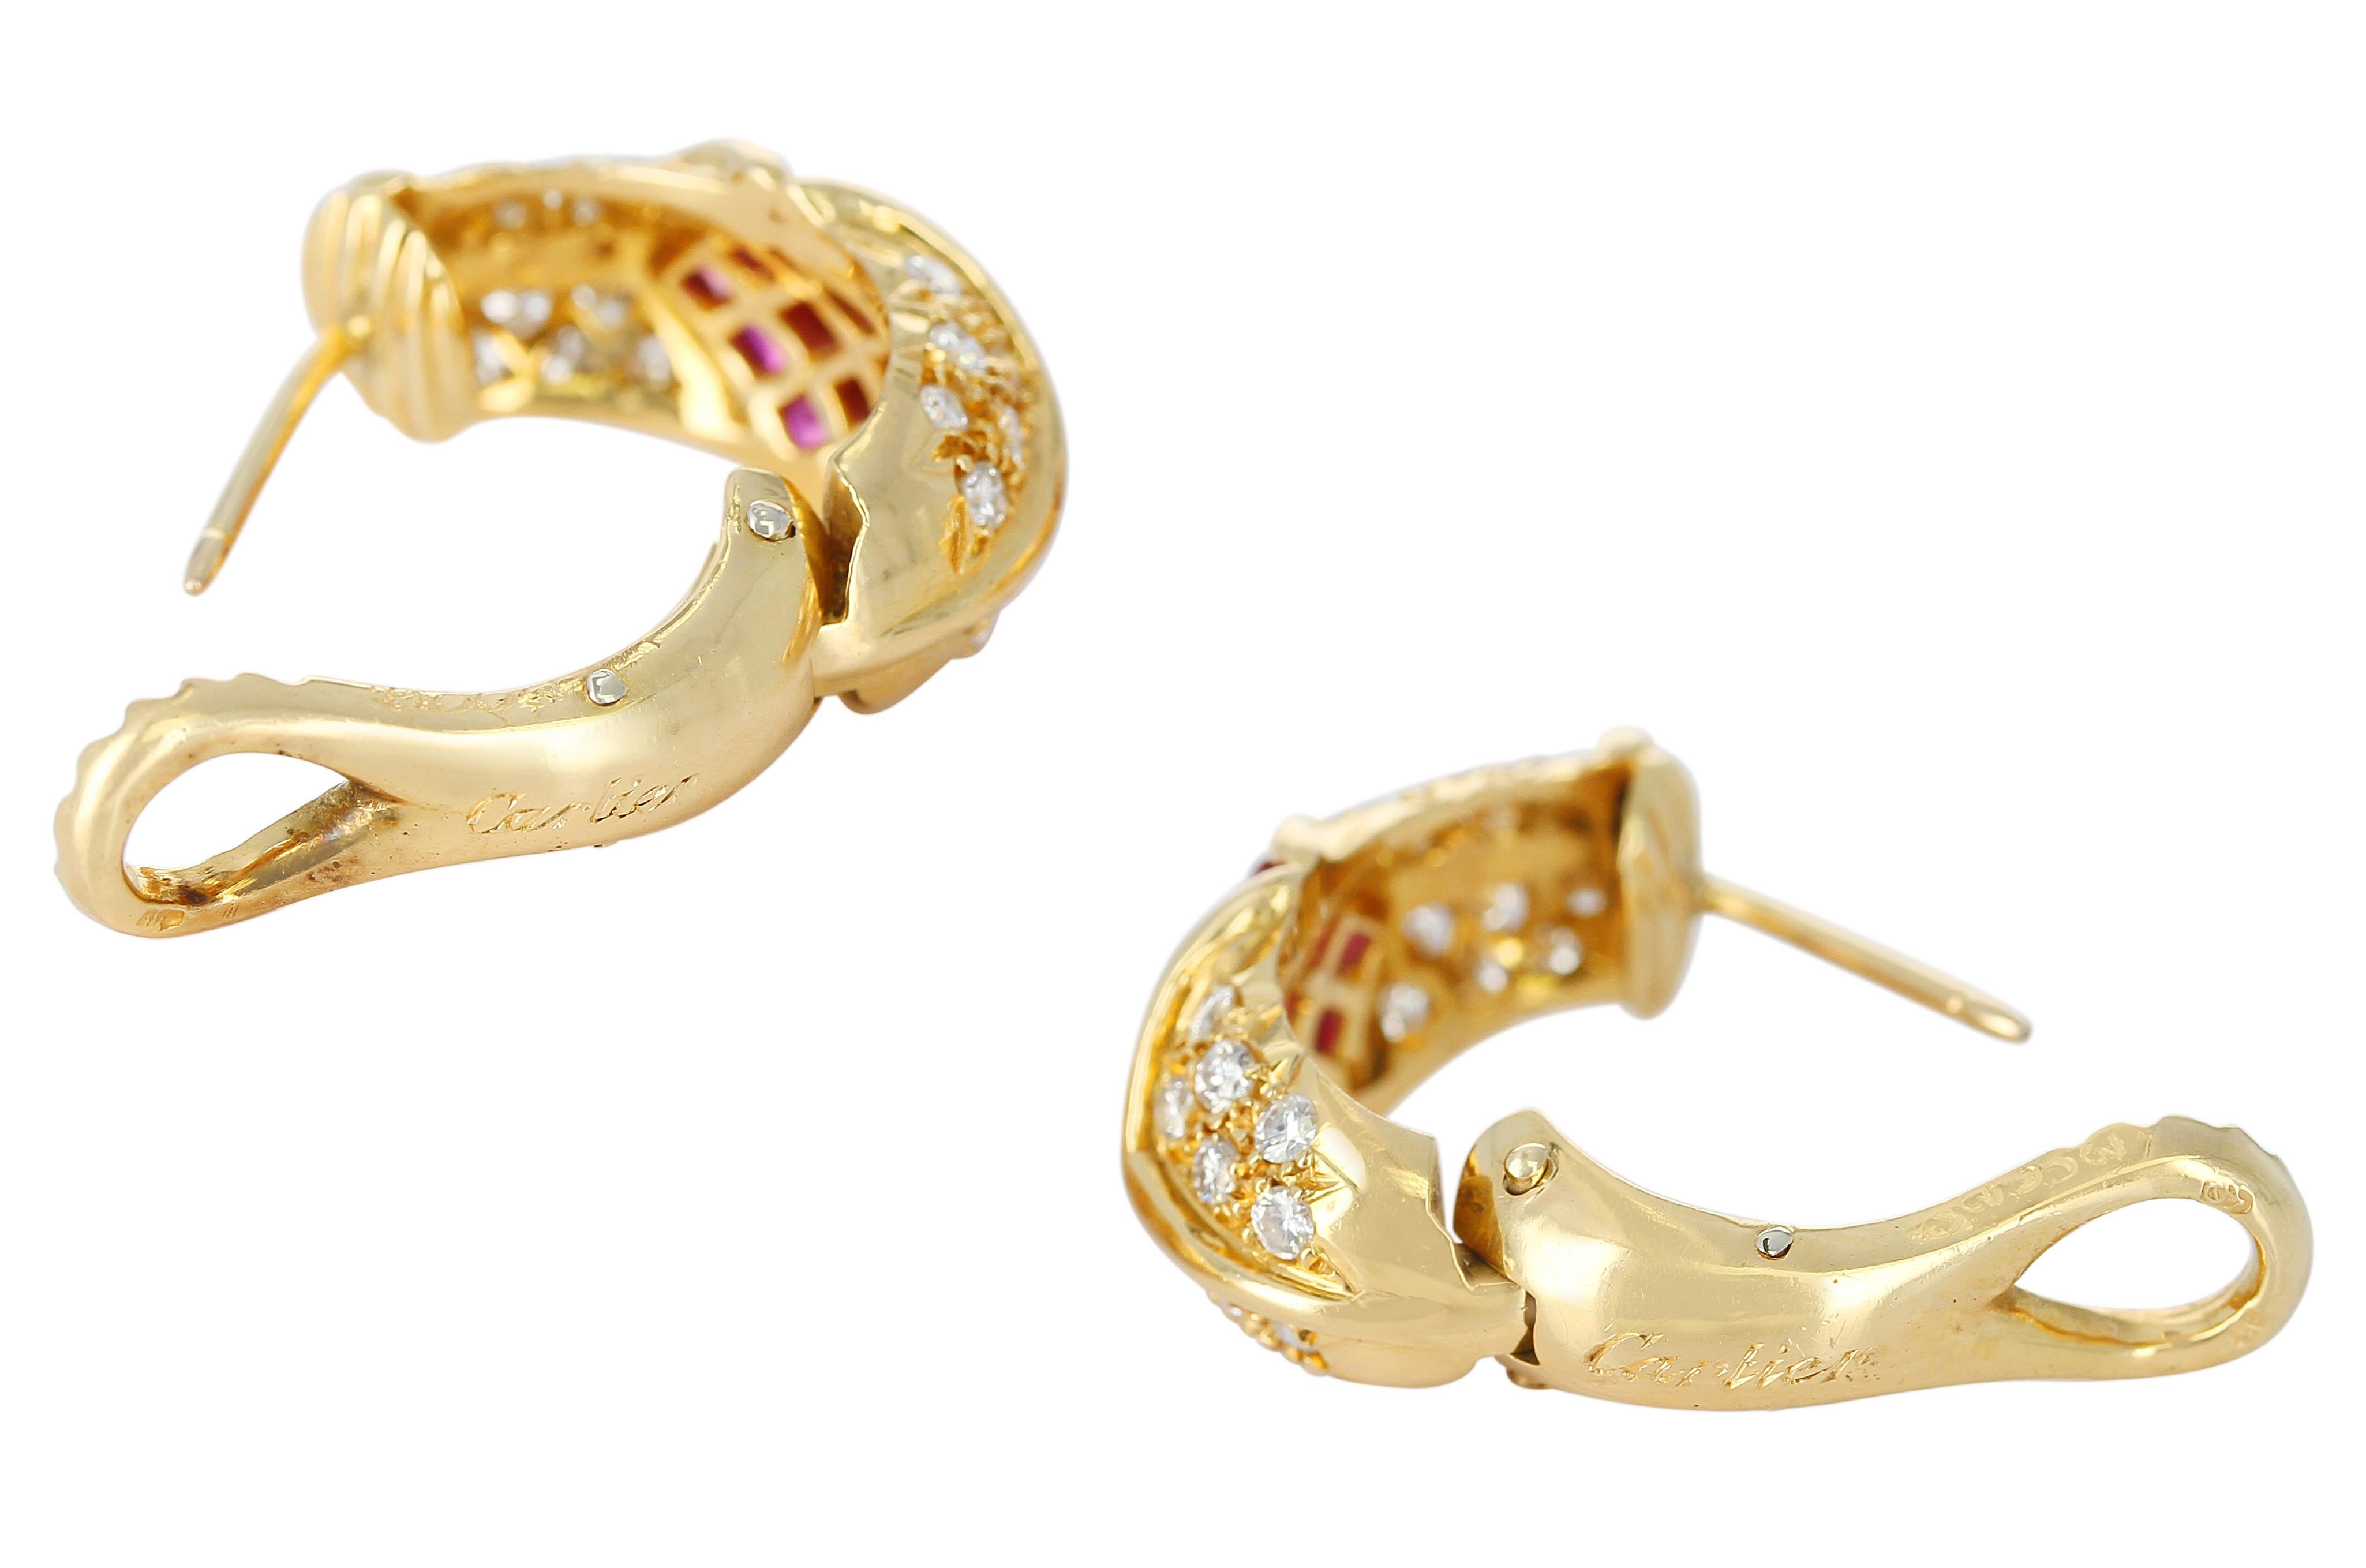 Square Cut Cartier Ruby and Diamond Earrings, 18 Karat Yellow Gold